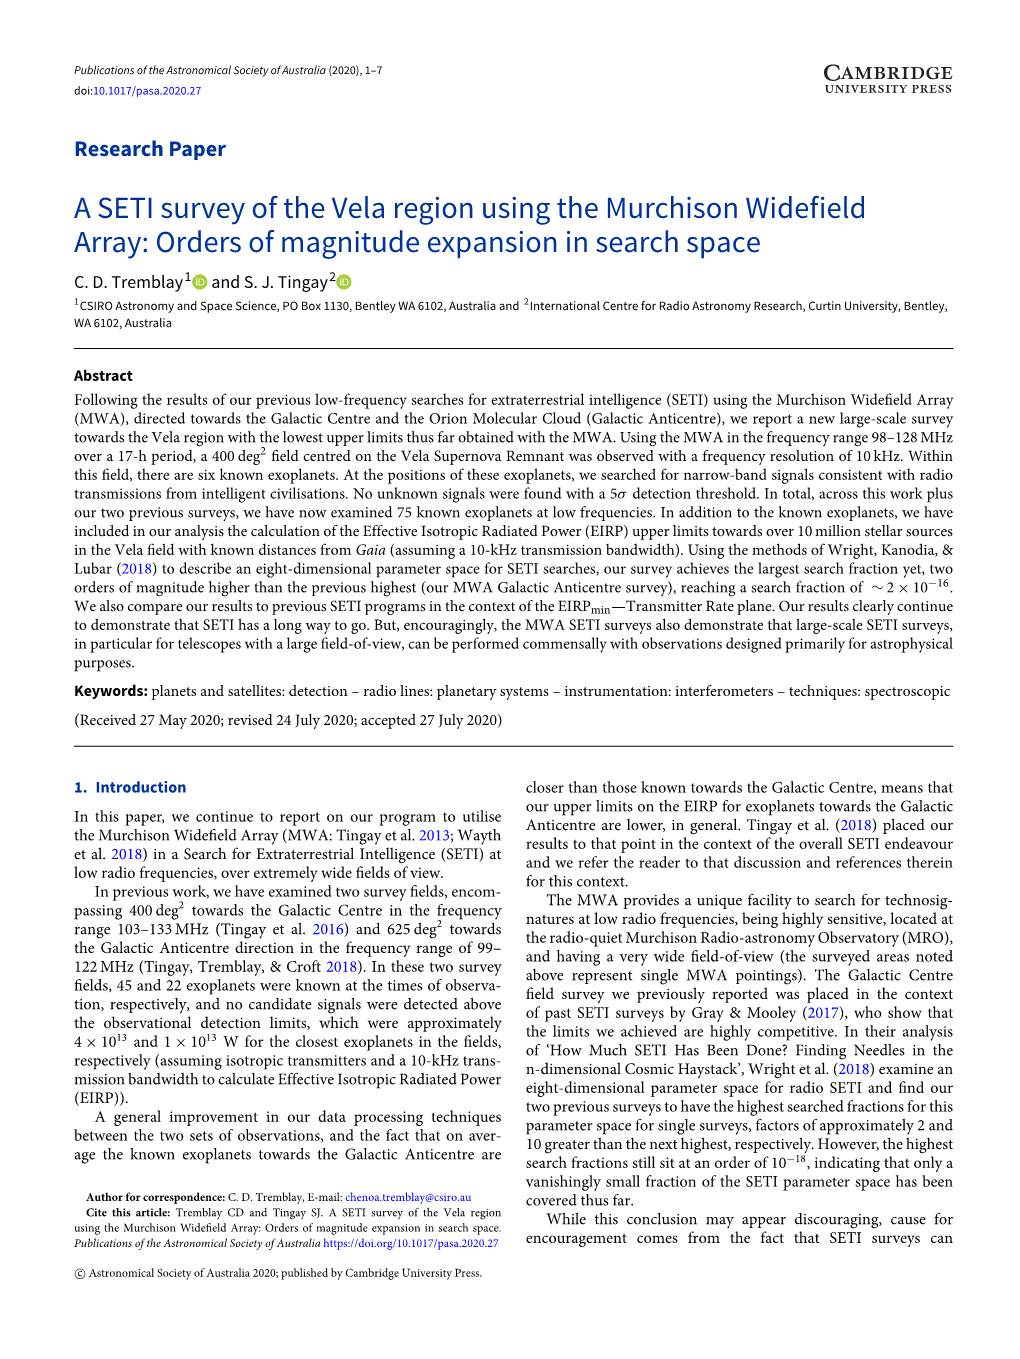 A SETI Survey of the Vela Region Using the Murchison Widefield Array